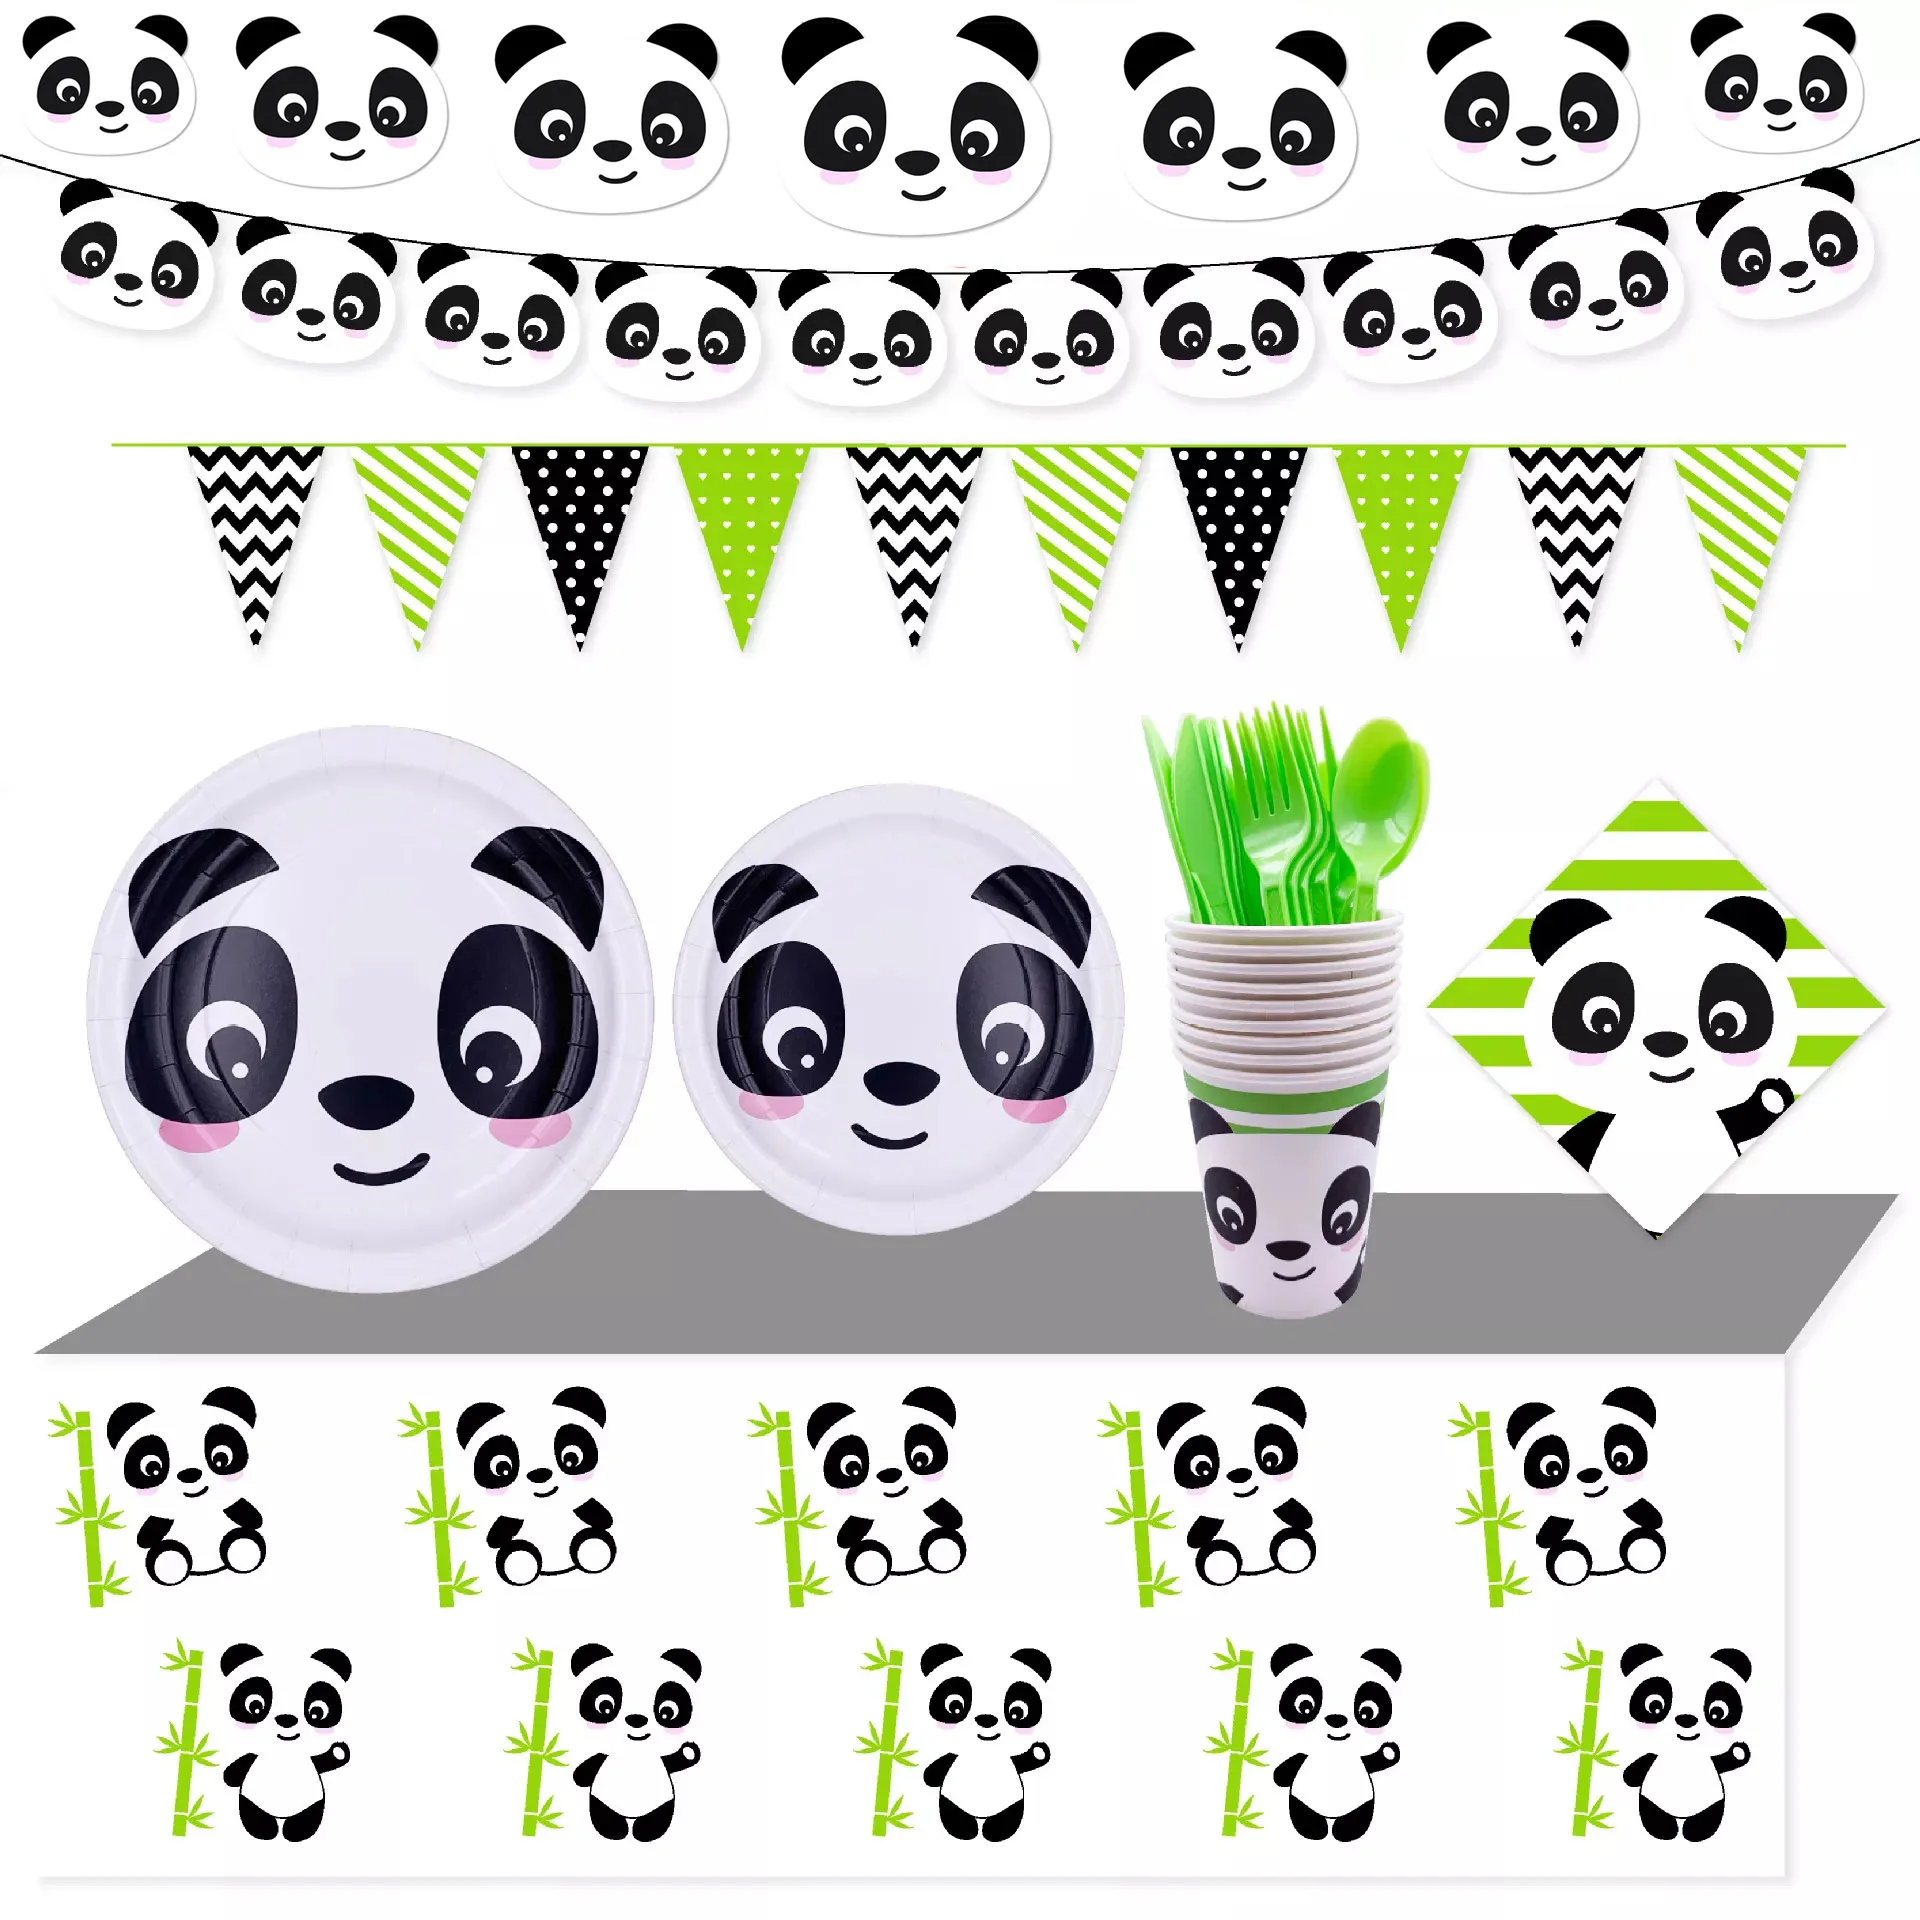 

Panda Theme Party Supplies Panda Disposable Tableware Panda Plates Cups Napkins Straws Banner Cake Toppers Kids Boy Baby Shower